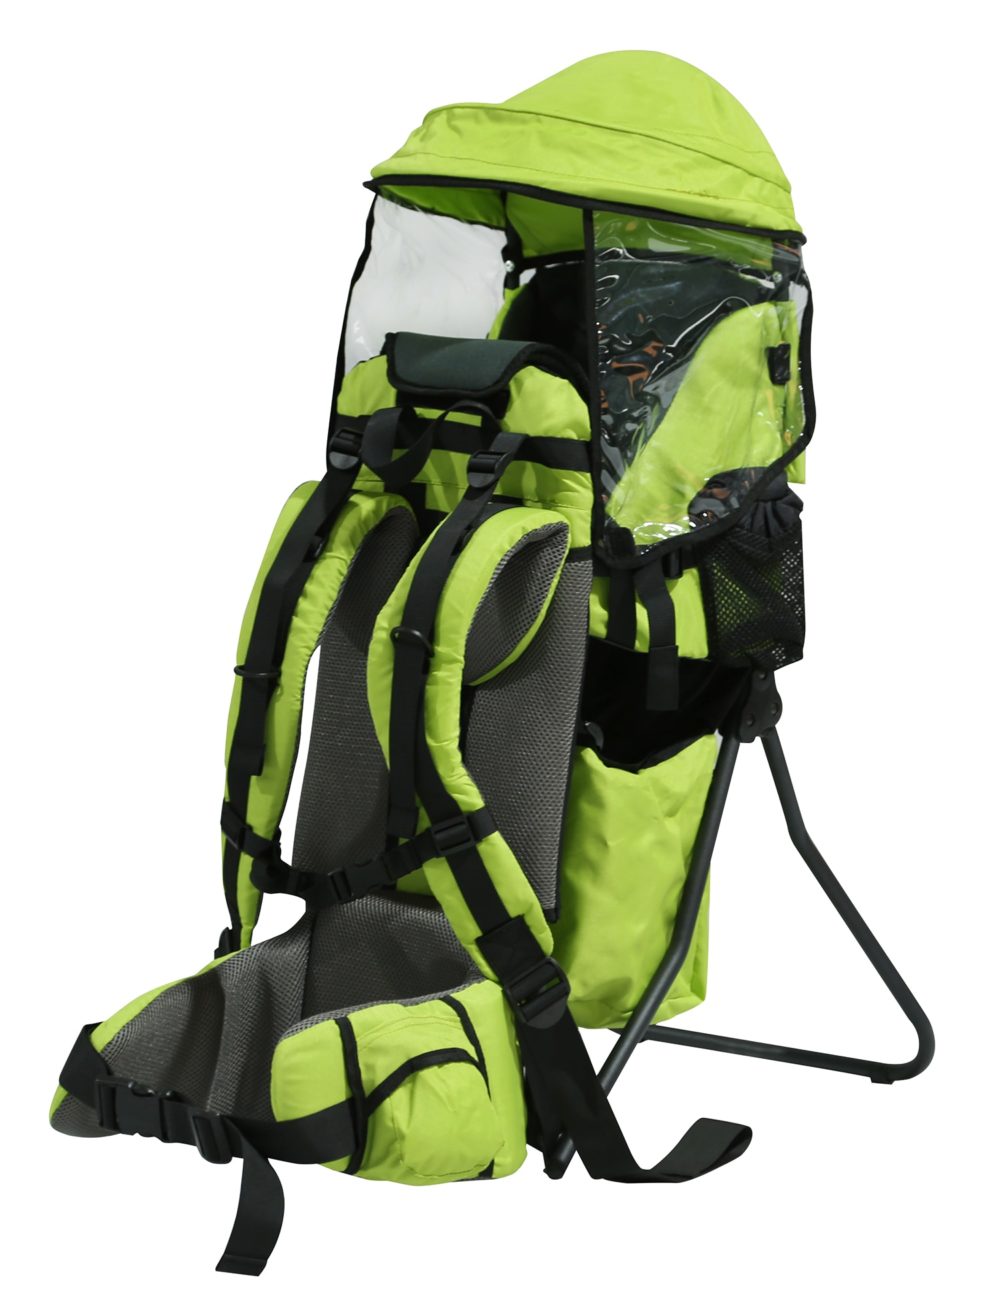 Porte-bébé pour randonnée sac à dos avec siège bébé Porte bébé randonnée Accessoire randonnée